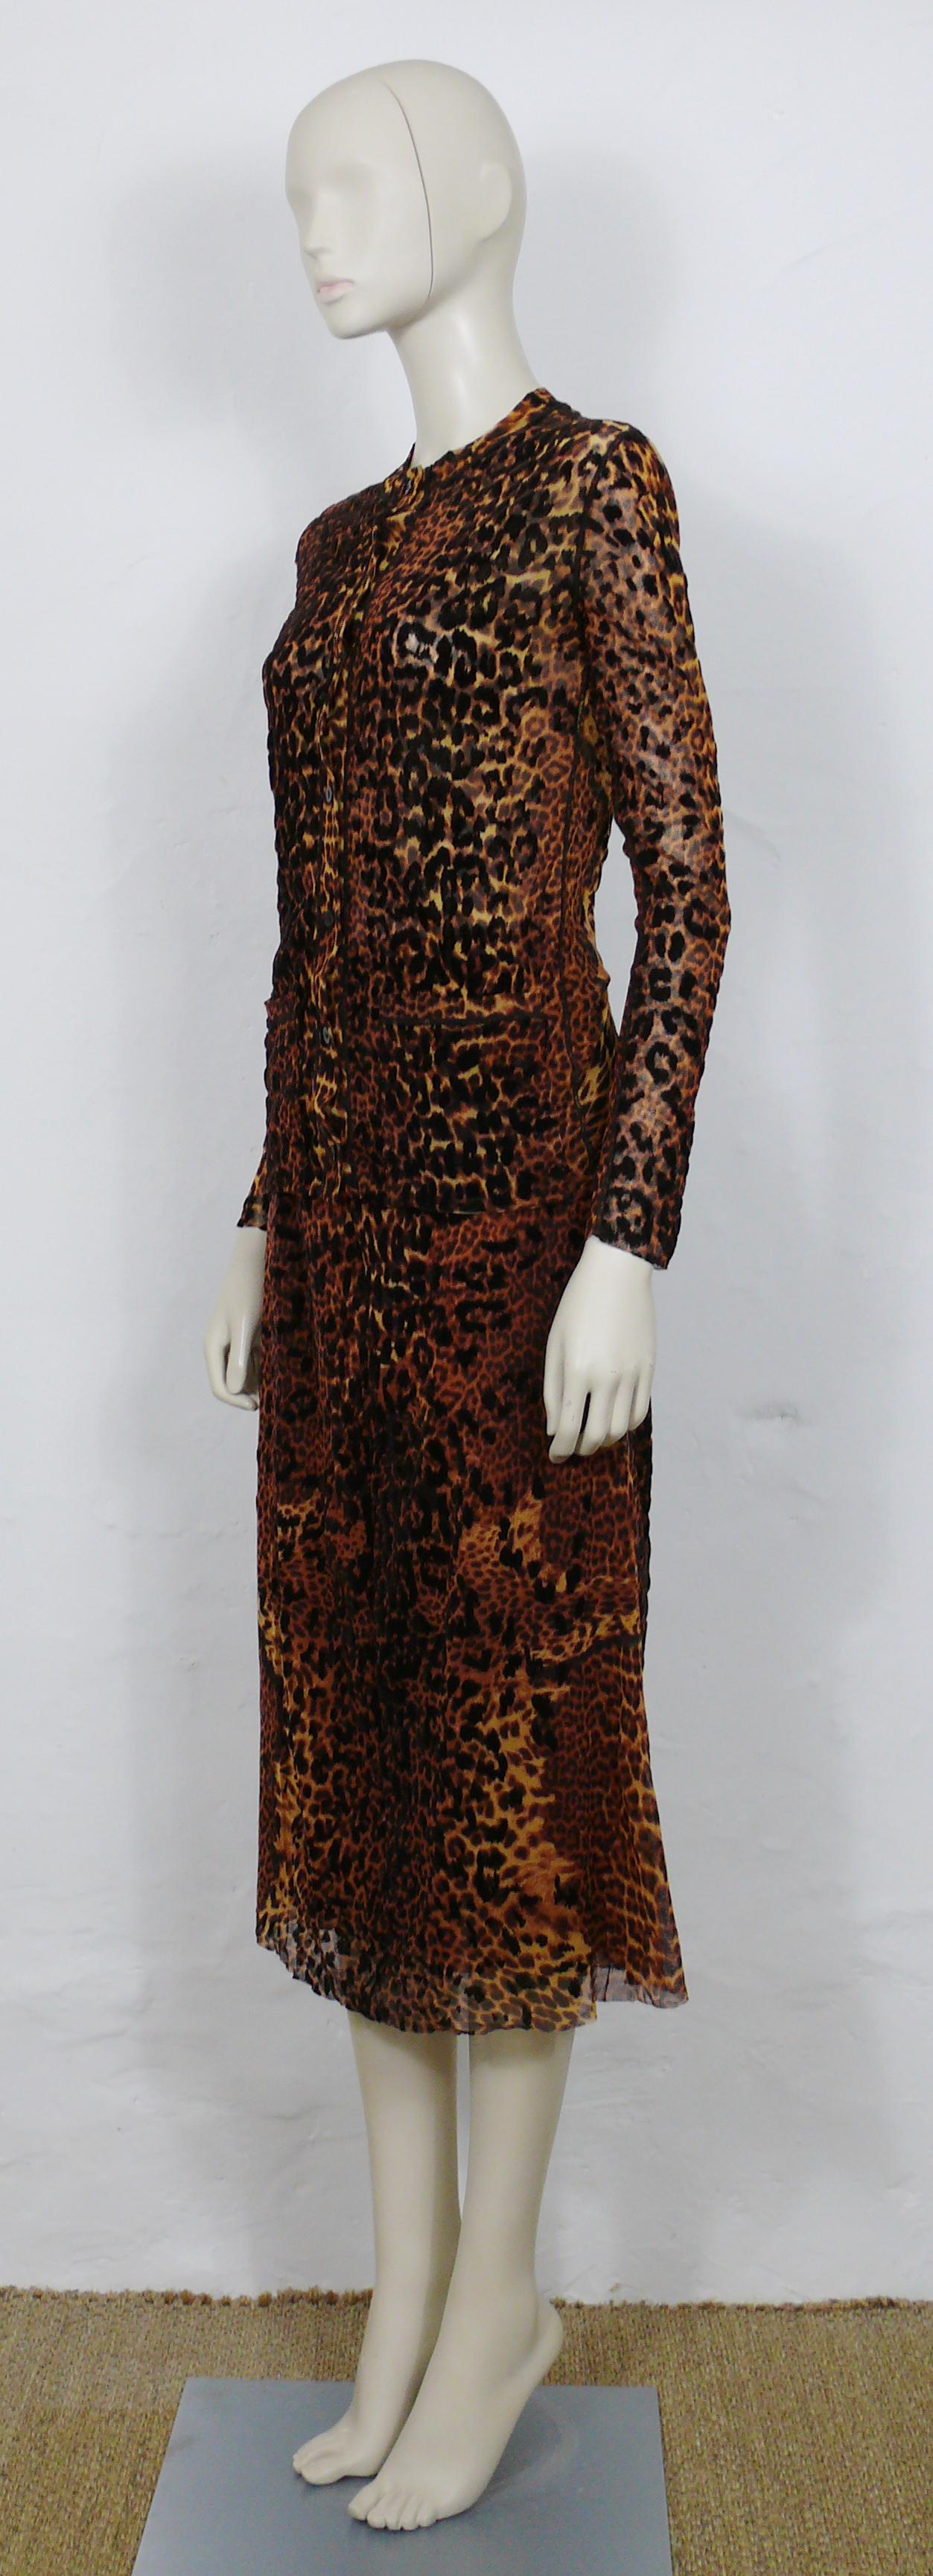 Jean Paul Gaultier Sheer Mesh Cheetah Print Cardigan and Skirt Ensemble Size M For Sale 1